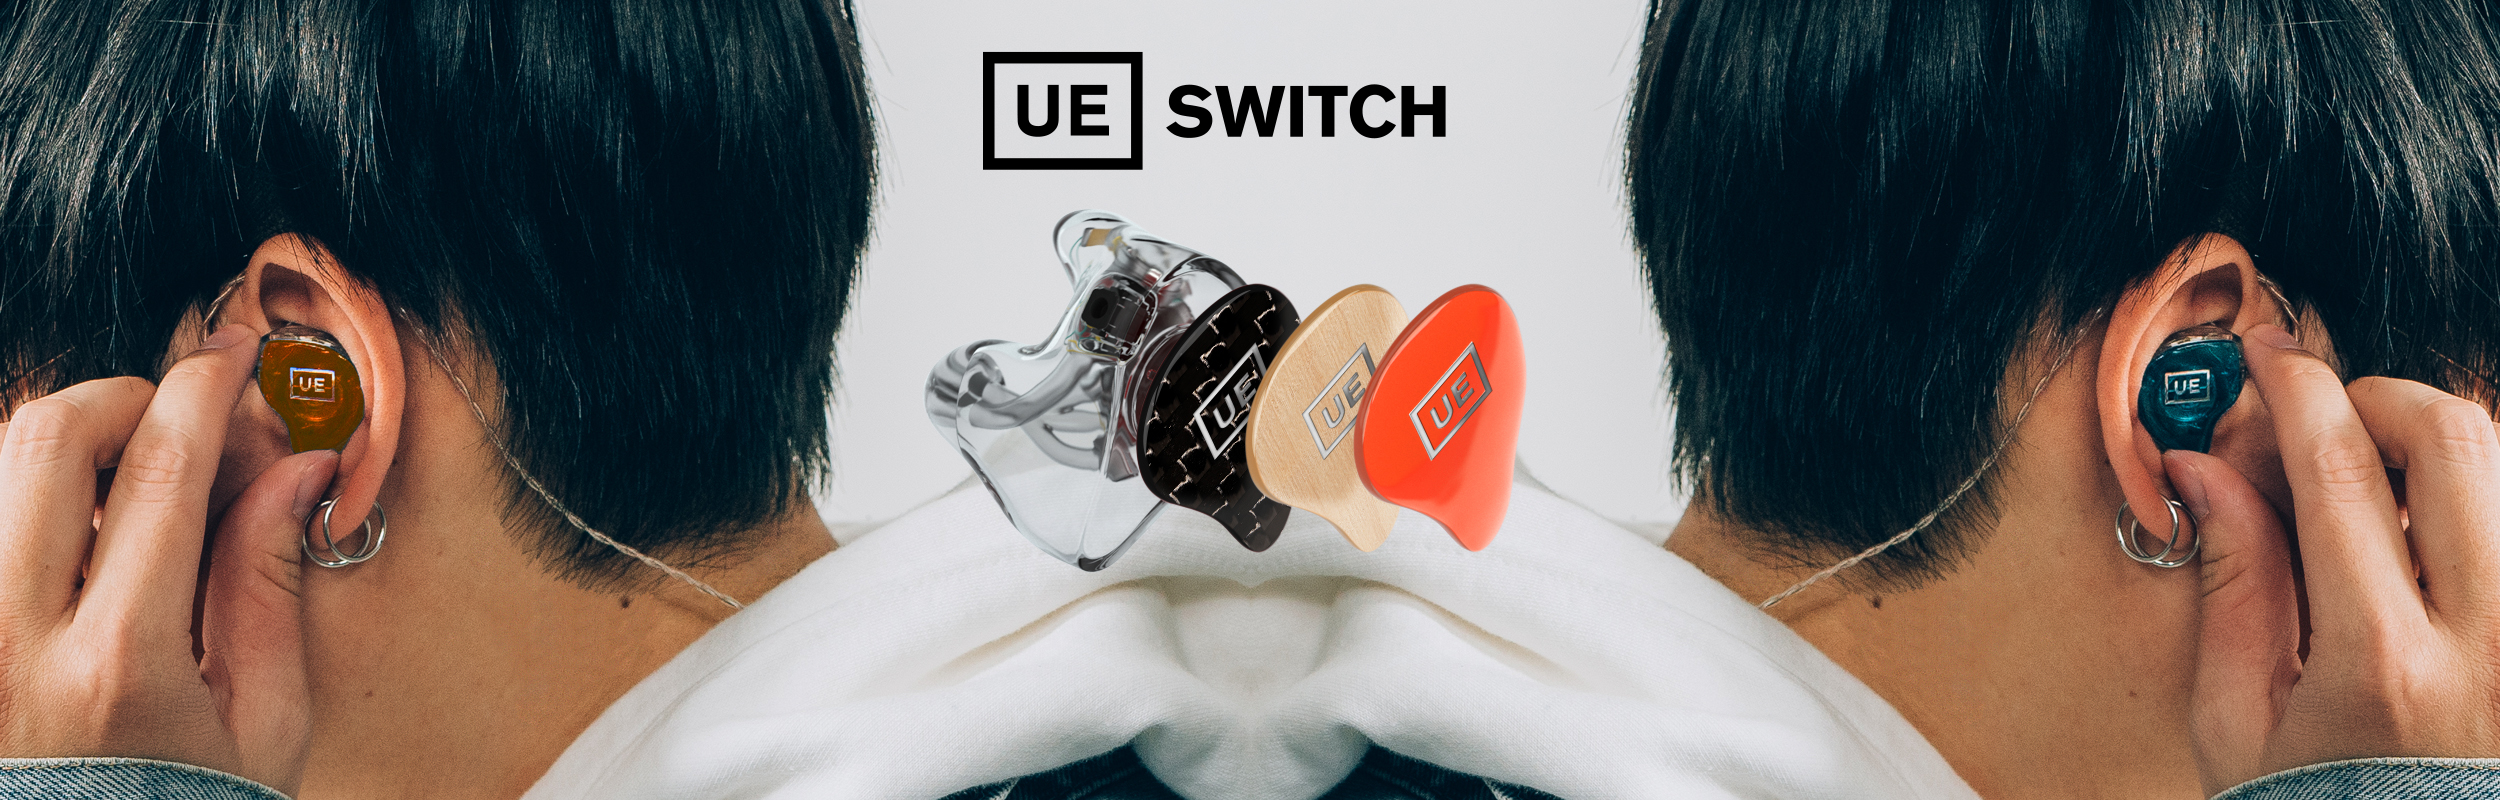 UE-Switch